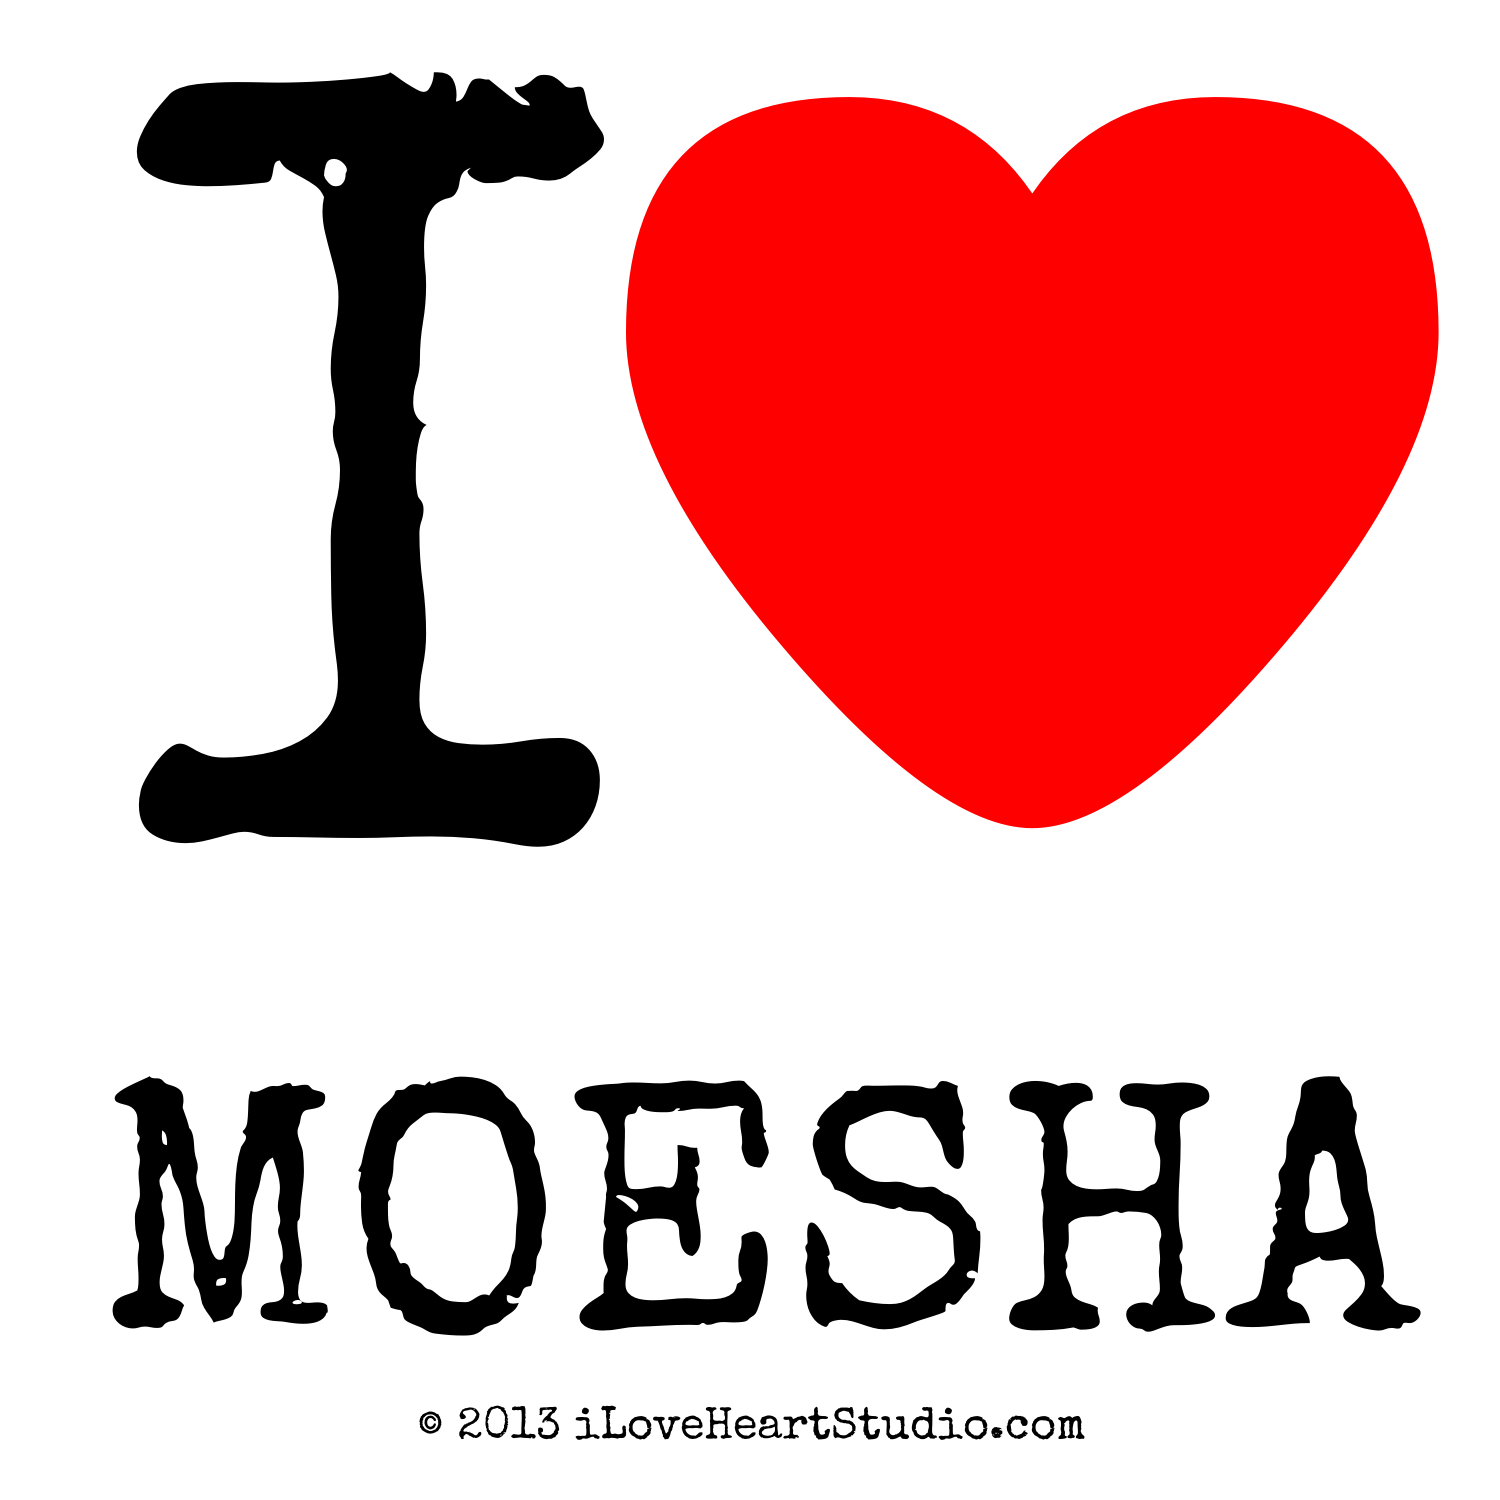 Moesha Logo - i [Love heart] moesha' design on t-shirt, poster, mug and many other ...